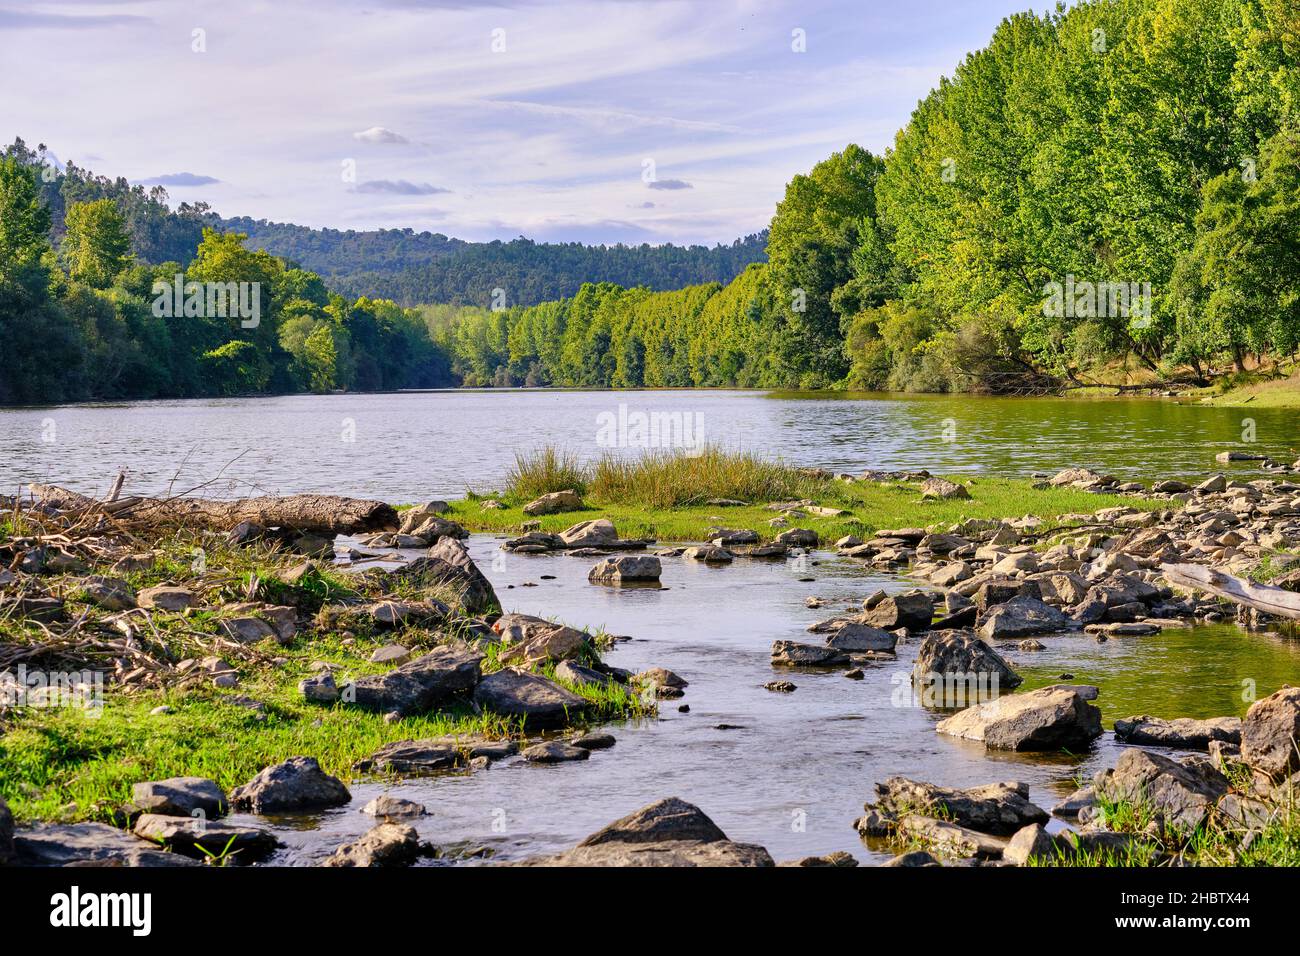 Der Tua-Fluss bei Frechas im Herbst. Regionaler Naturpark von Tale do Tua, Mirandela. Portugal Stockfoto